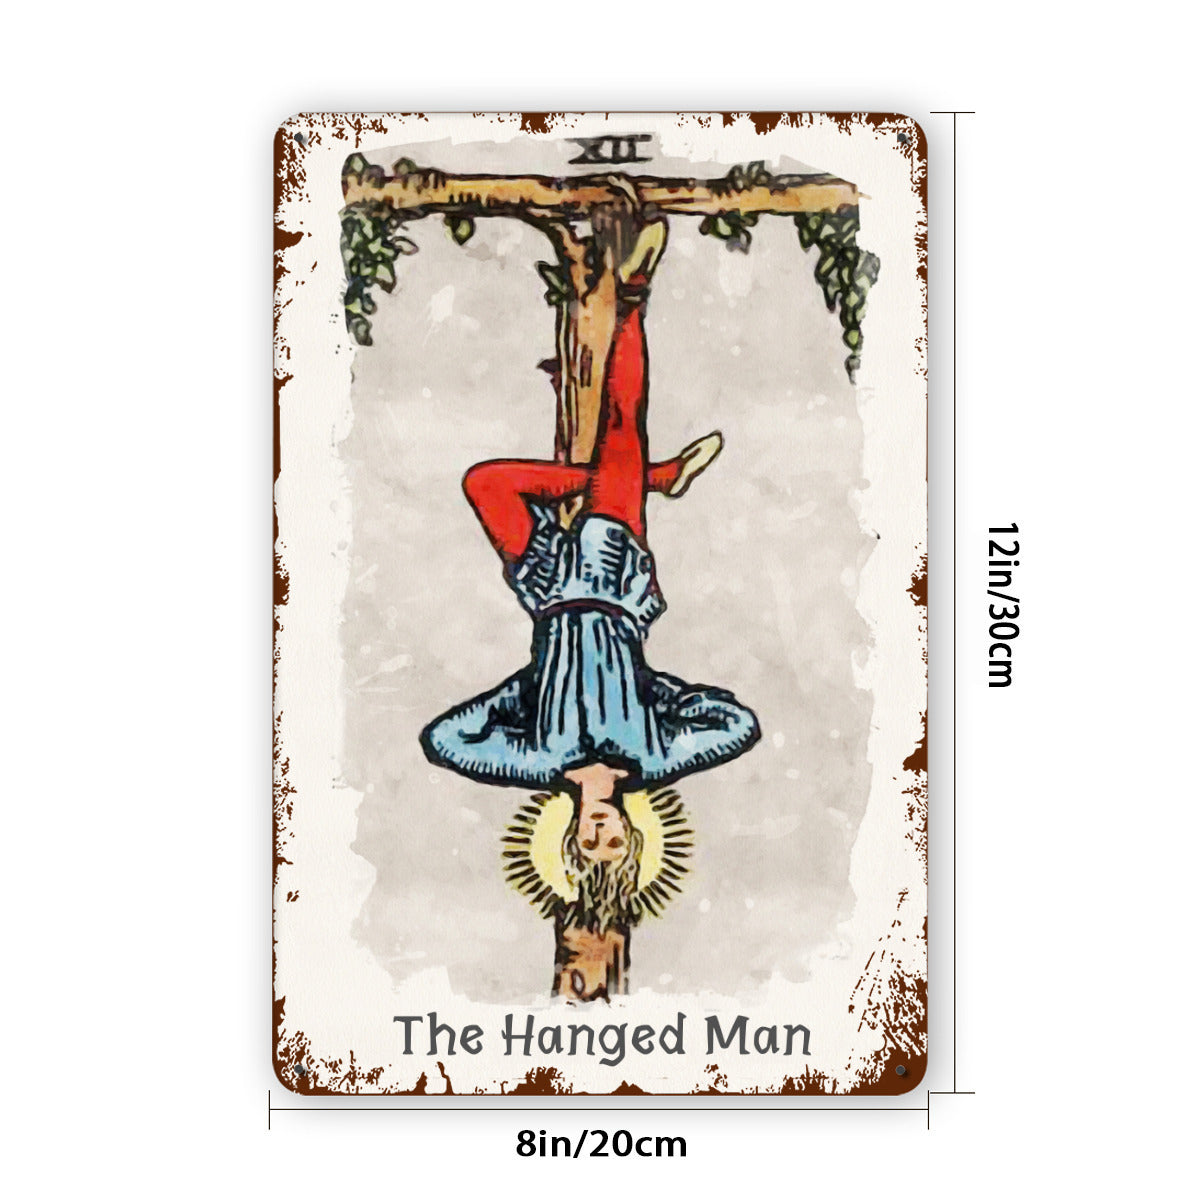 Tin Sign Of The Hanged Man Tarot Card Painting • Major Arcana Waite-Style Cards Vintage Metal Print  • Apollo Tarot Design Shop